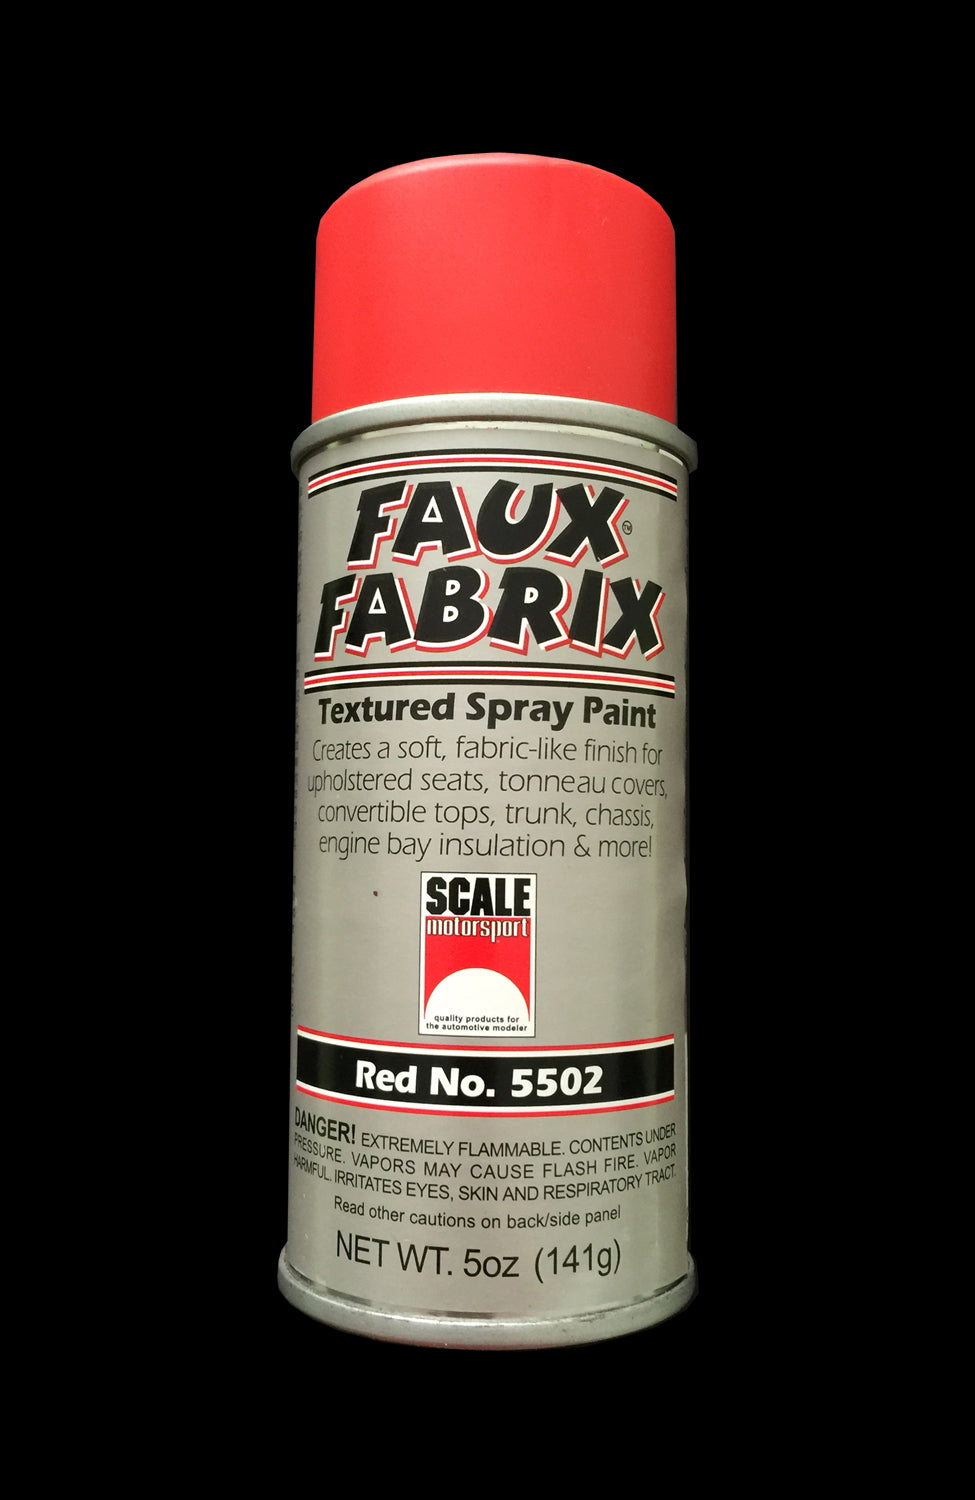 Faux Fabrix Textured Spray Paint Sku#: 5502